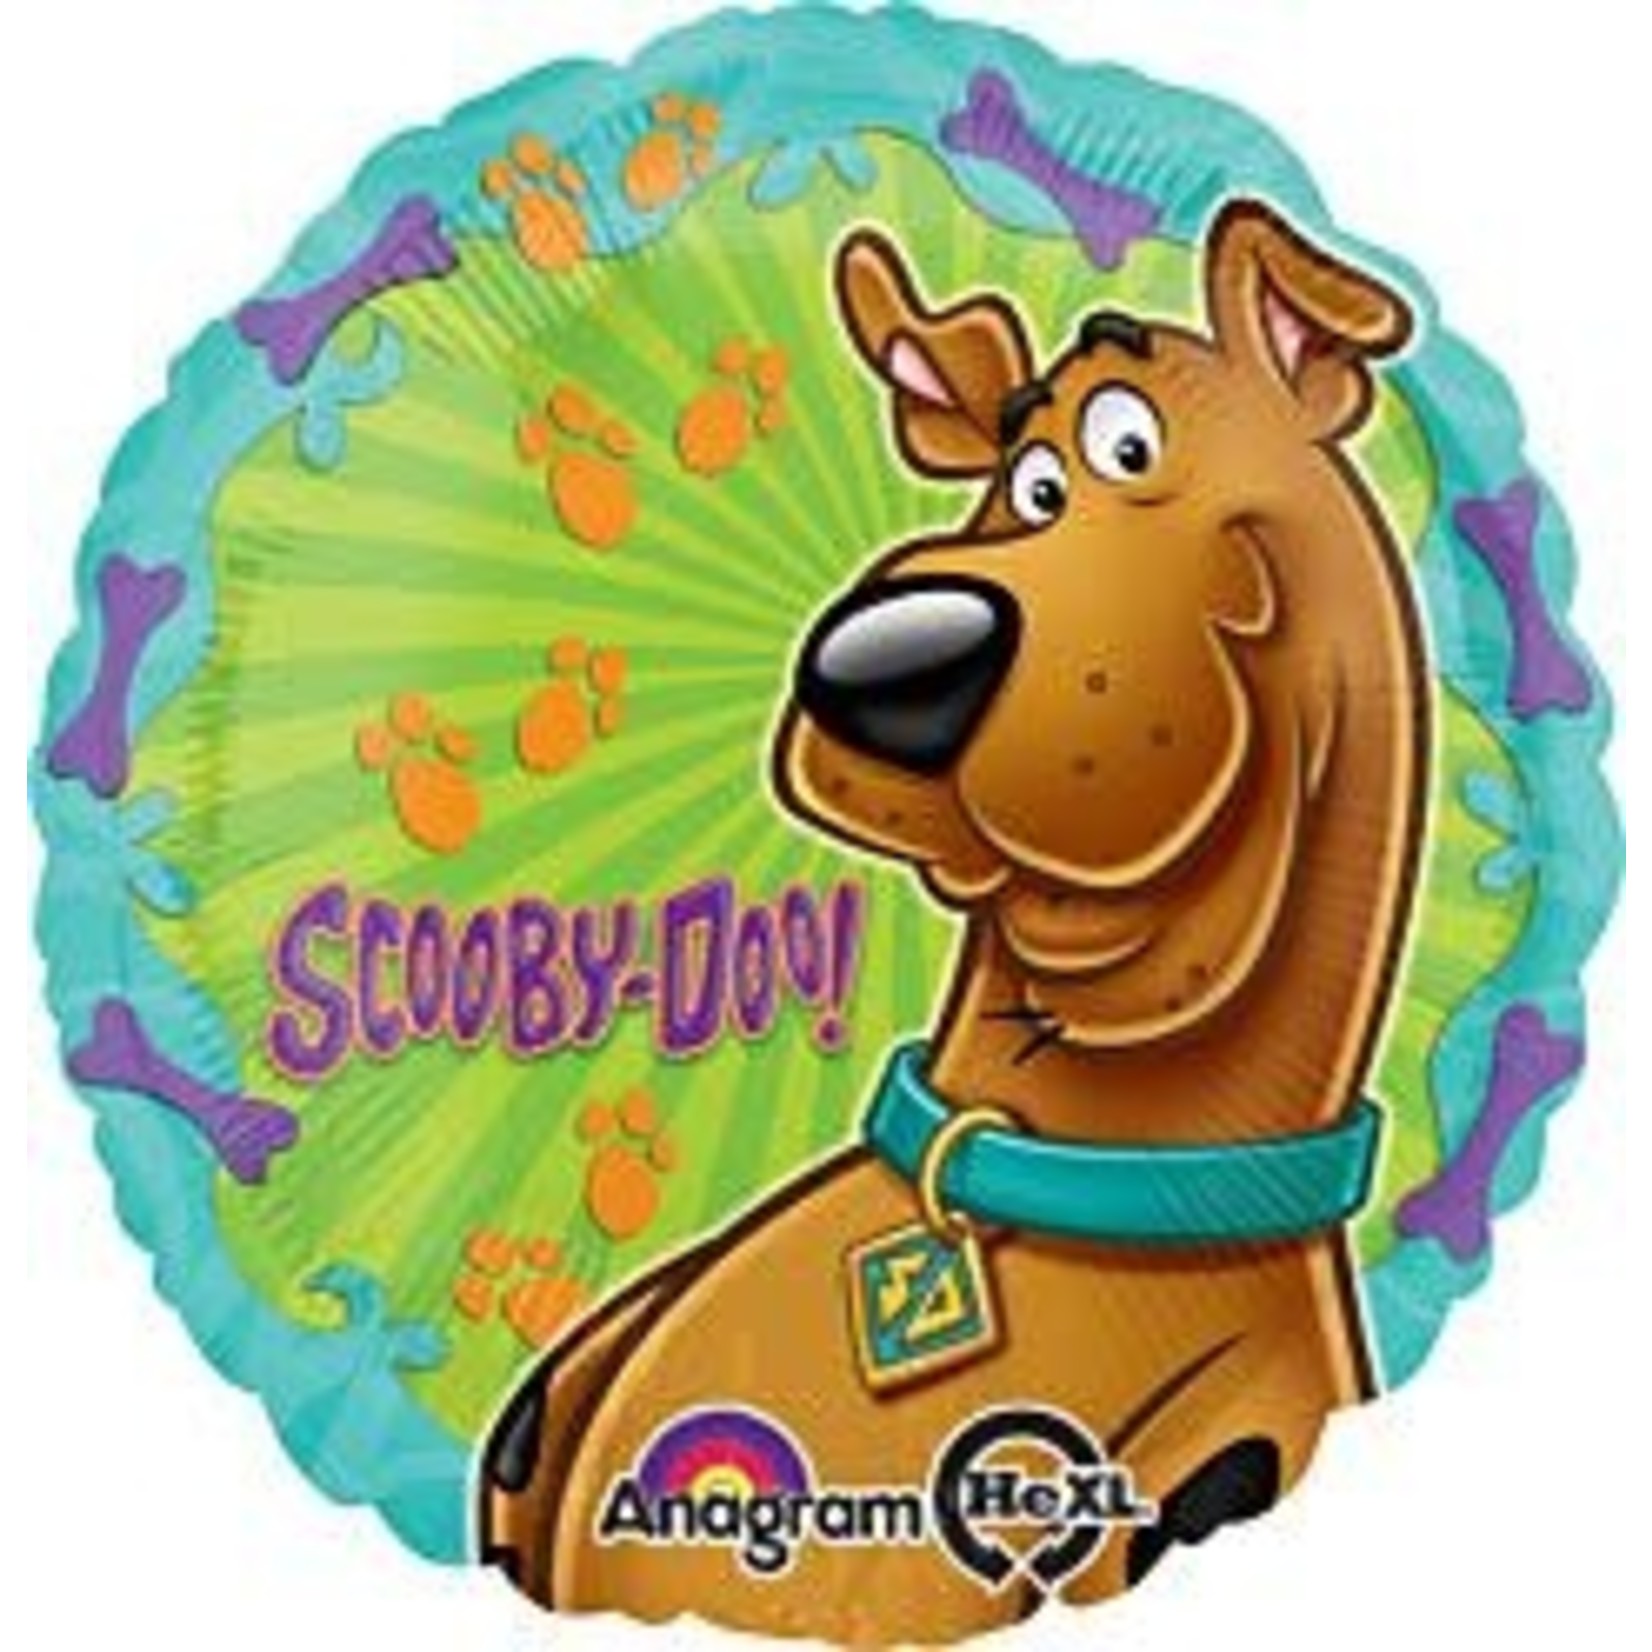 mayflower 18" Scooby Doo Mylar Balloon - 1ct.